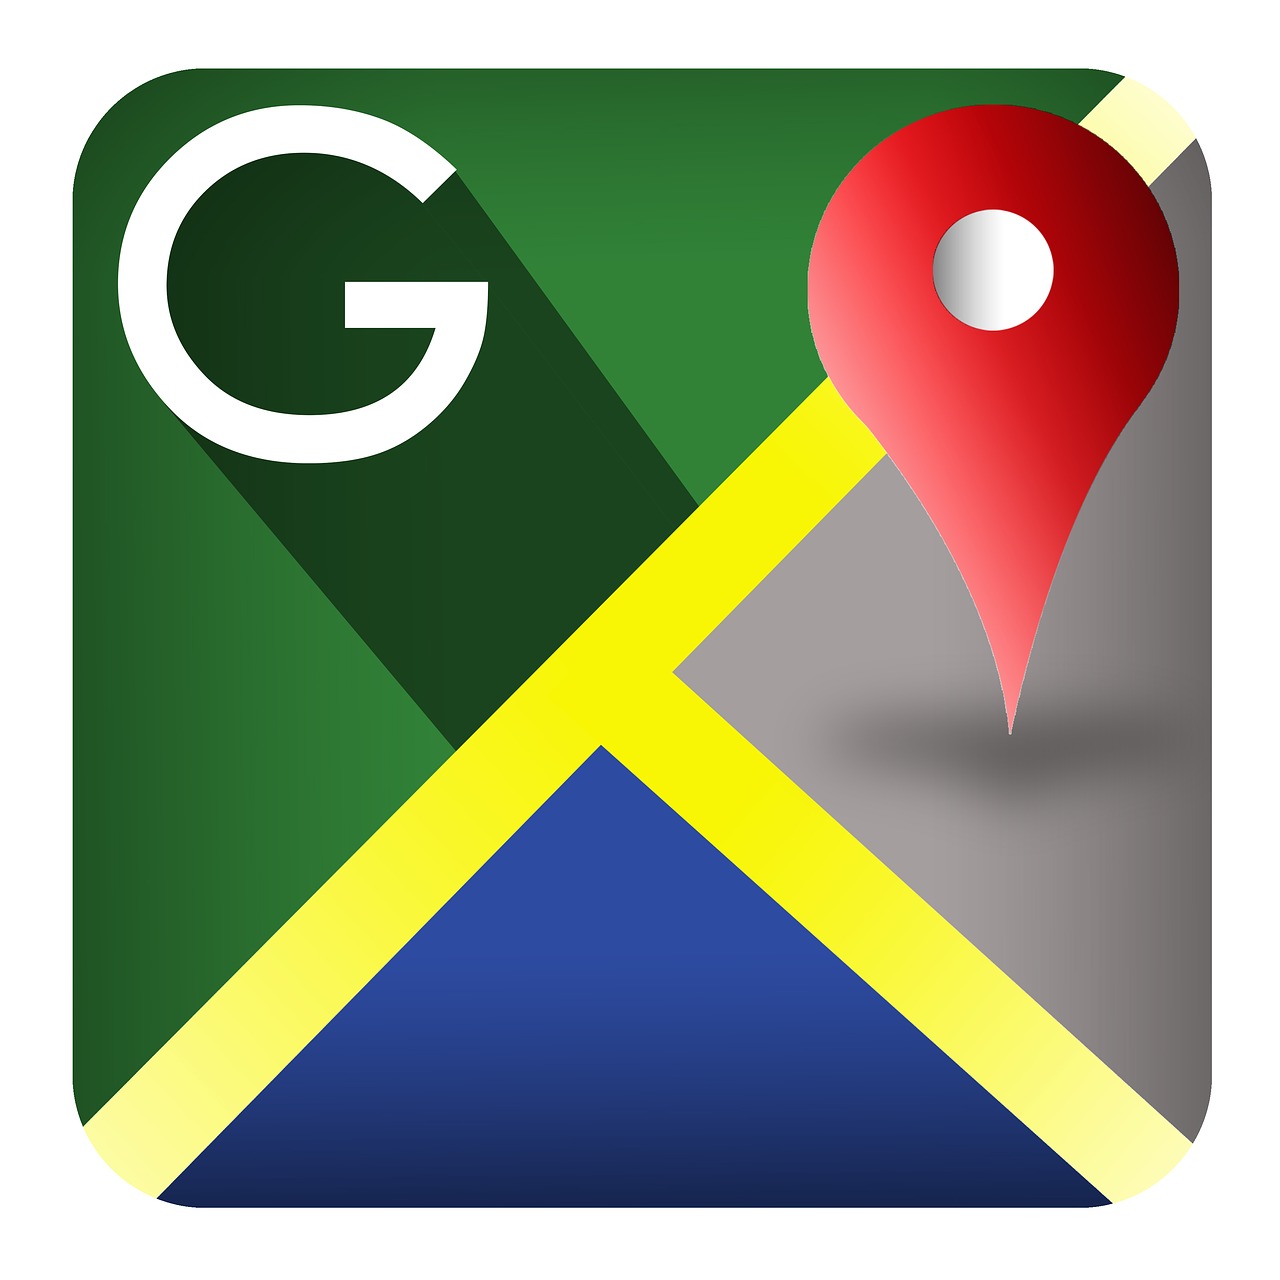 Logo,google,location,symbol,free pictures - free image from needpix.com